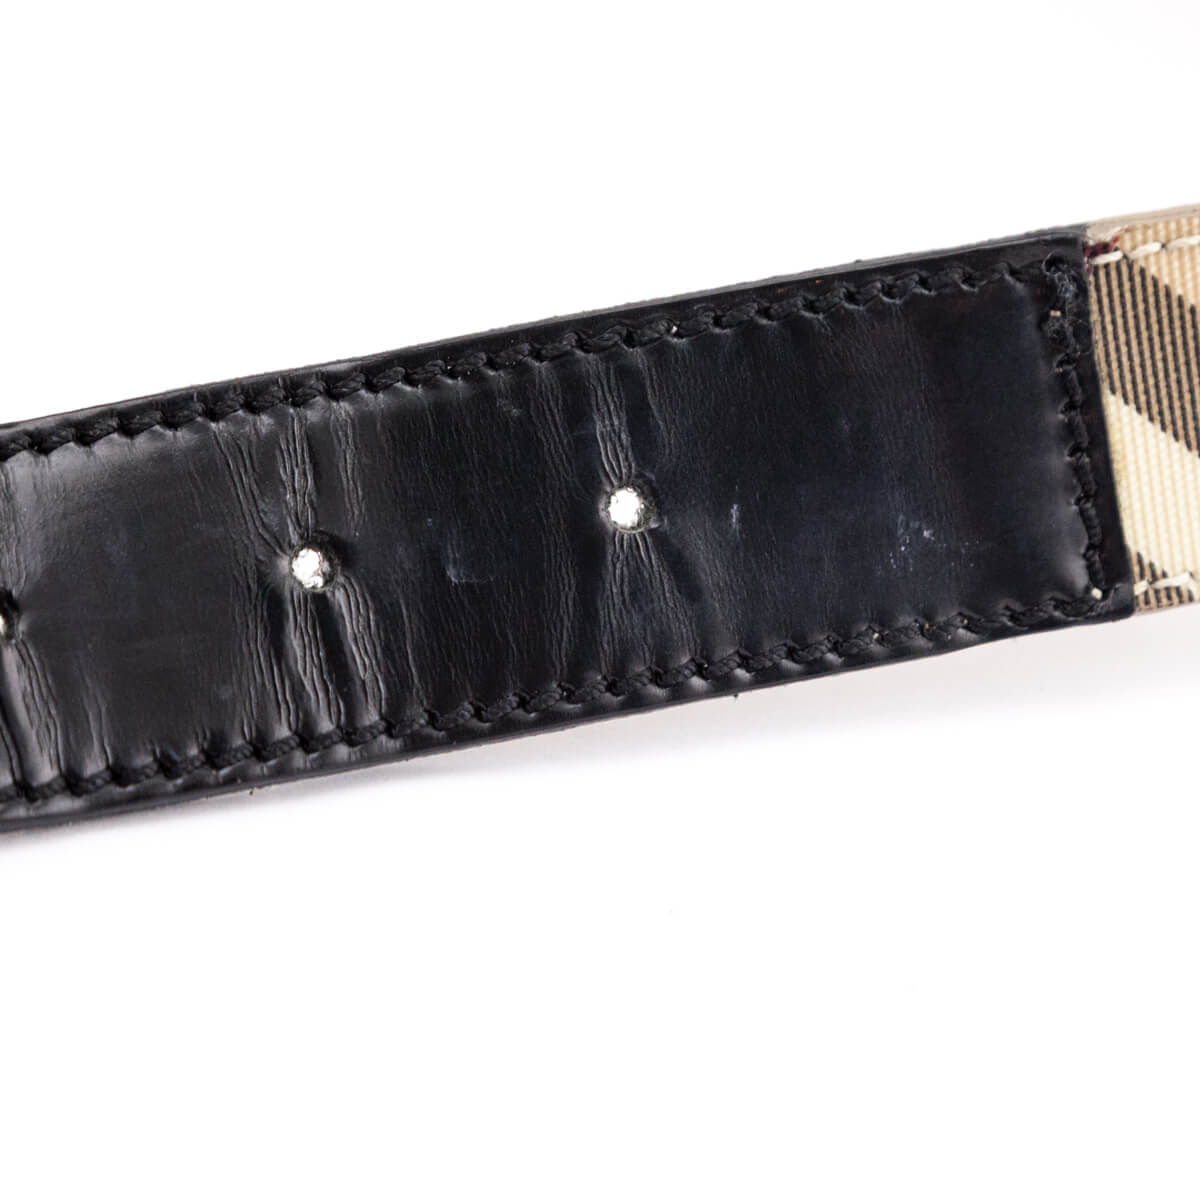 Authentic Burberry Mens Nova Check Beige Leather Belt Size 46 / 115 